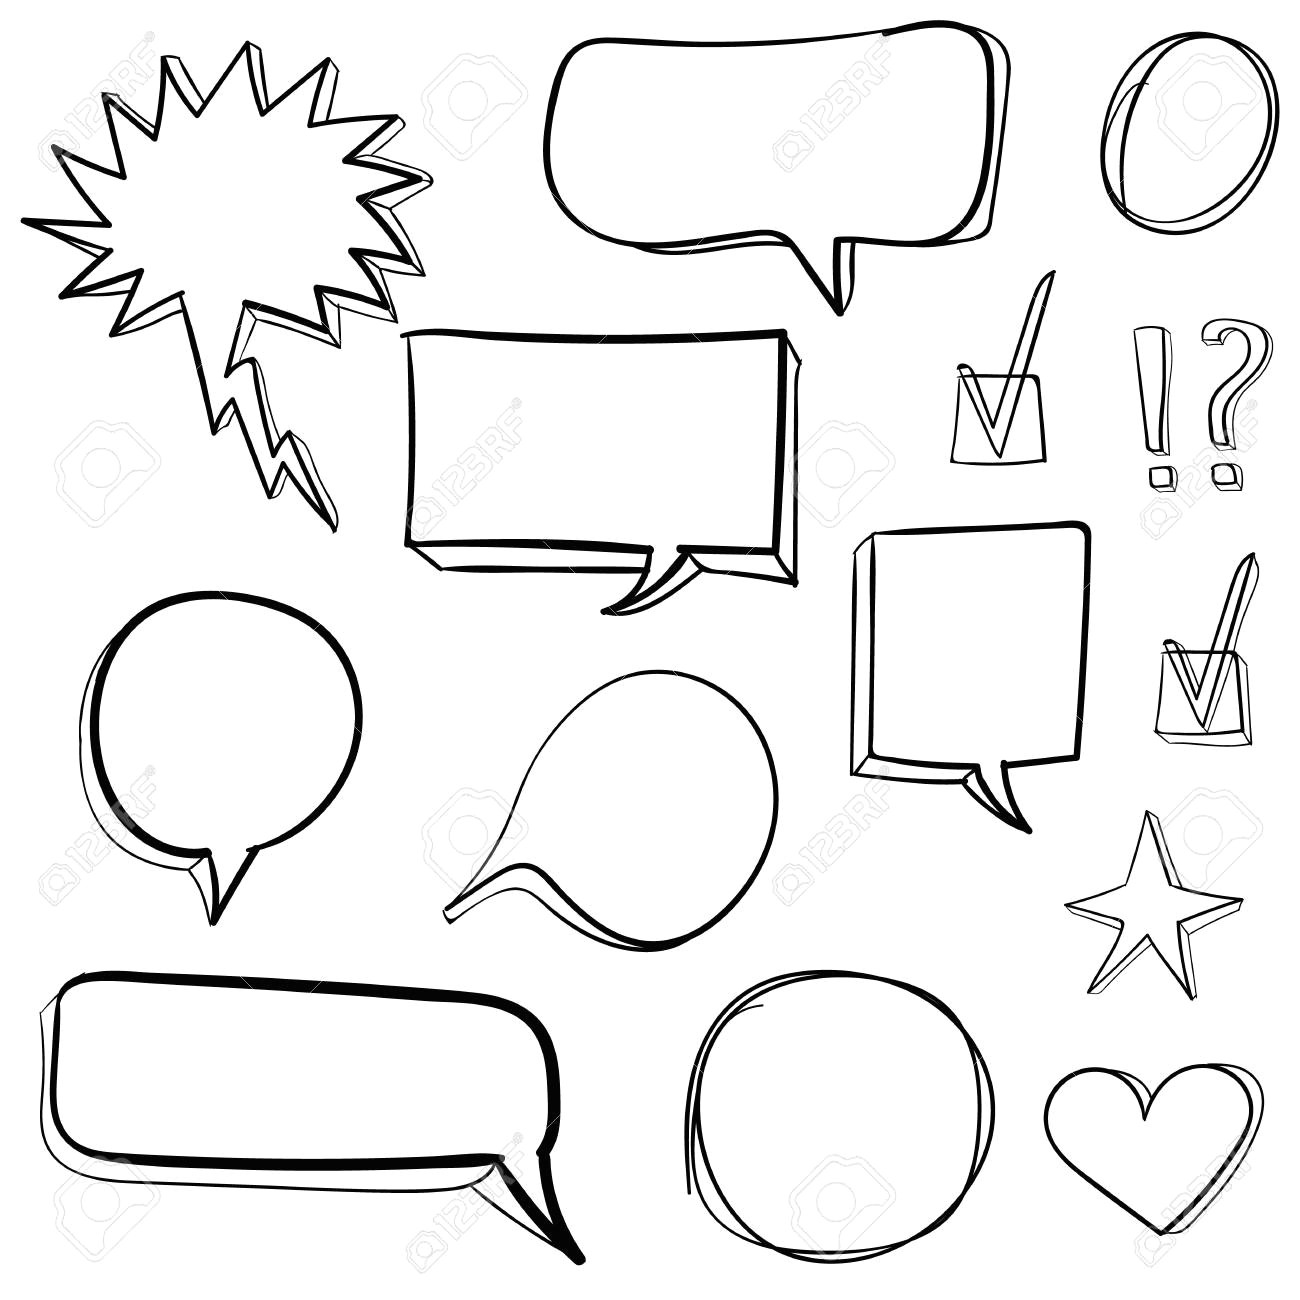 set od 3d hand drawn icons check mark star heart speech bubbles